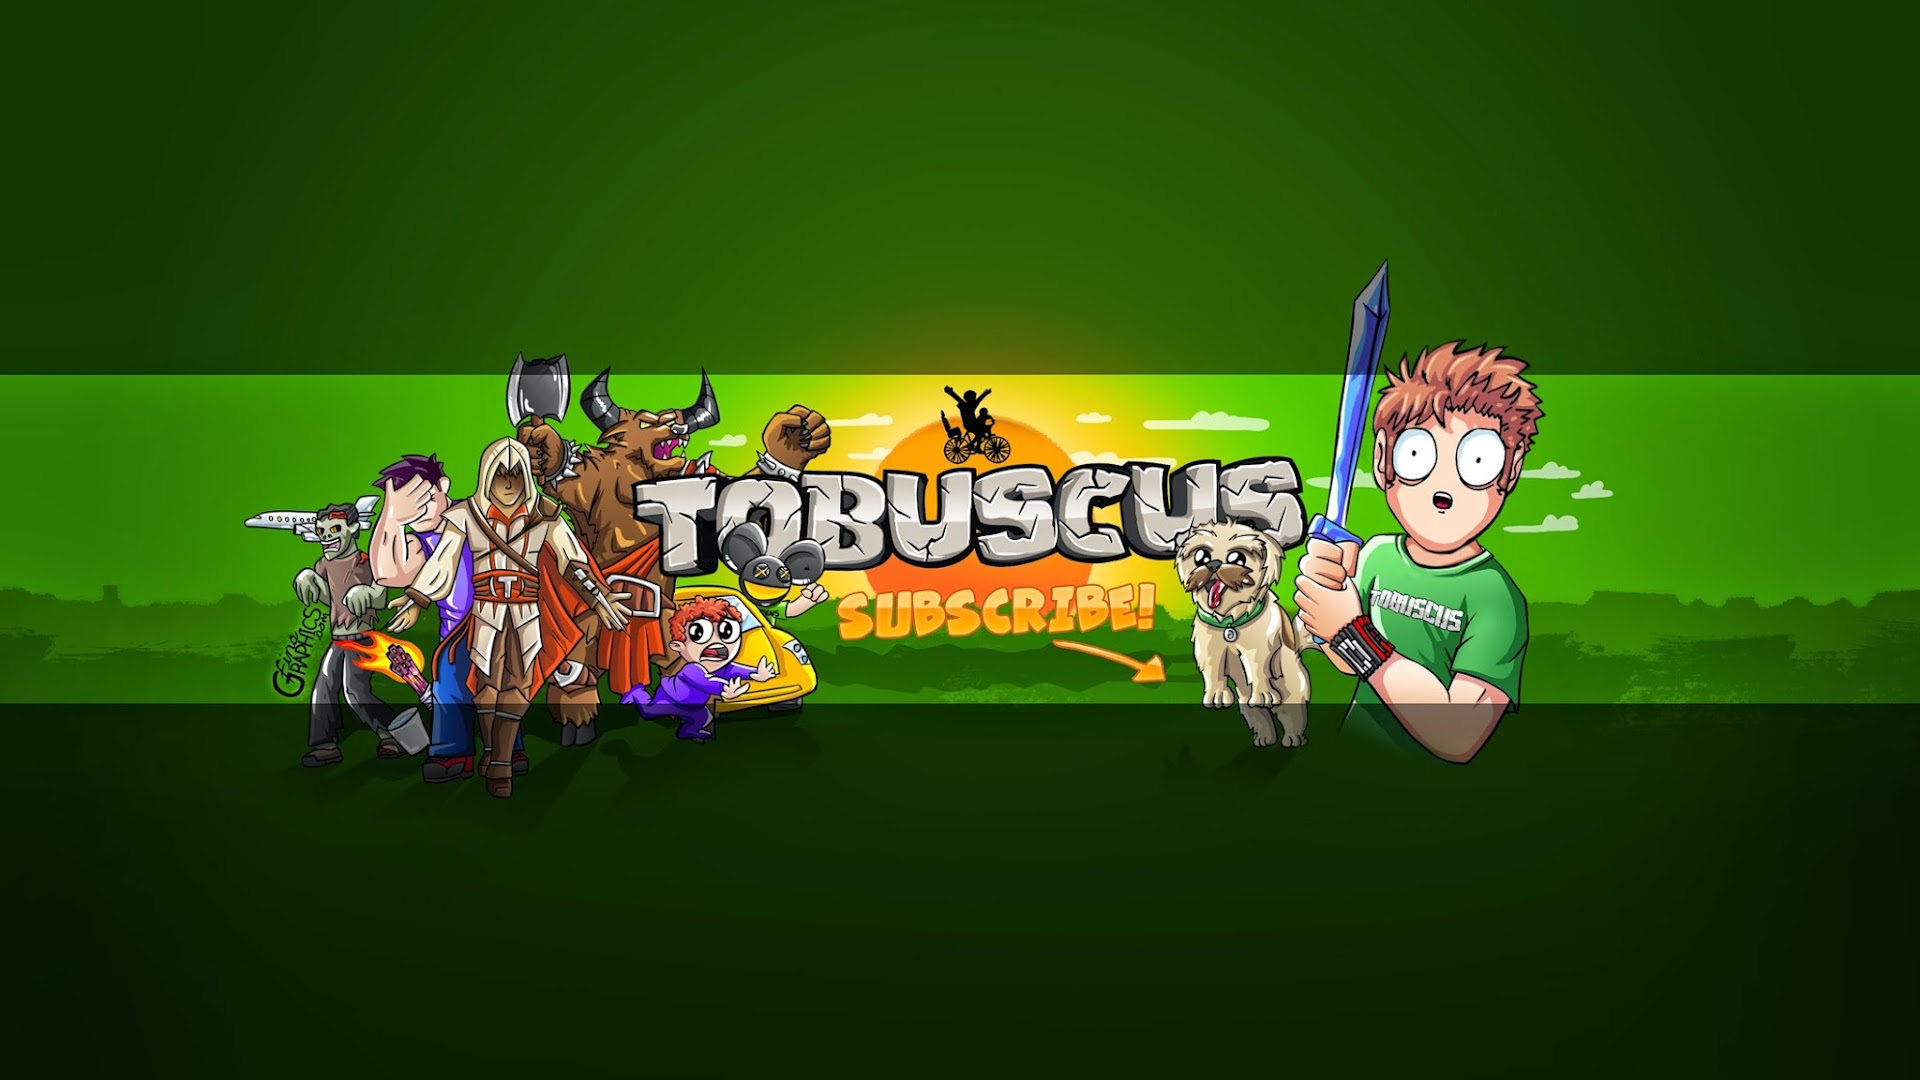 tobuscus logo green wallpaper